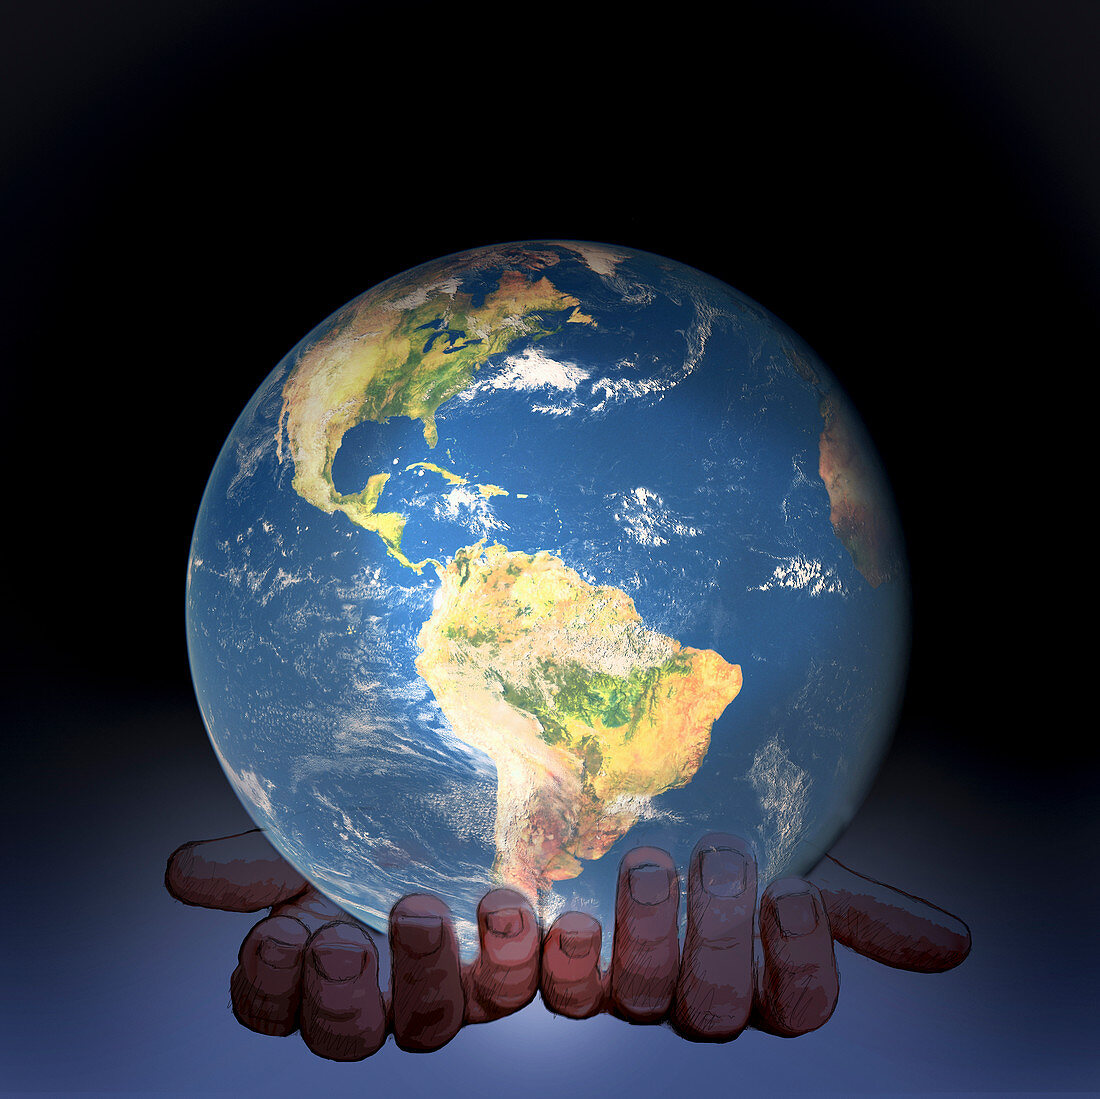 Hands holding glowing globe, illustration